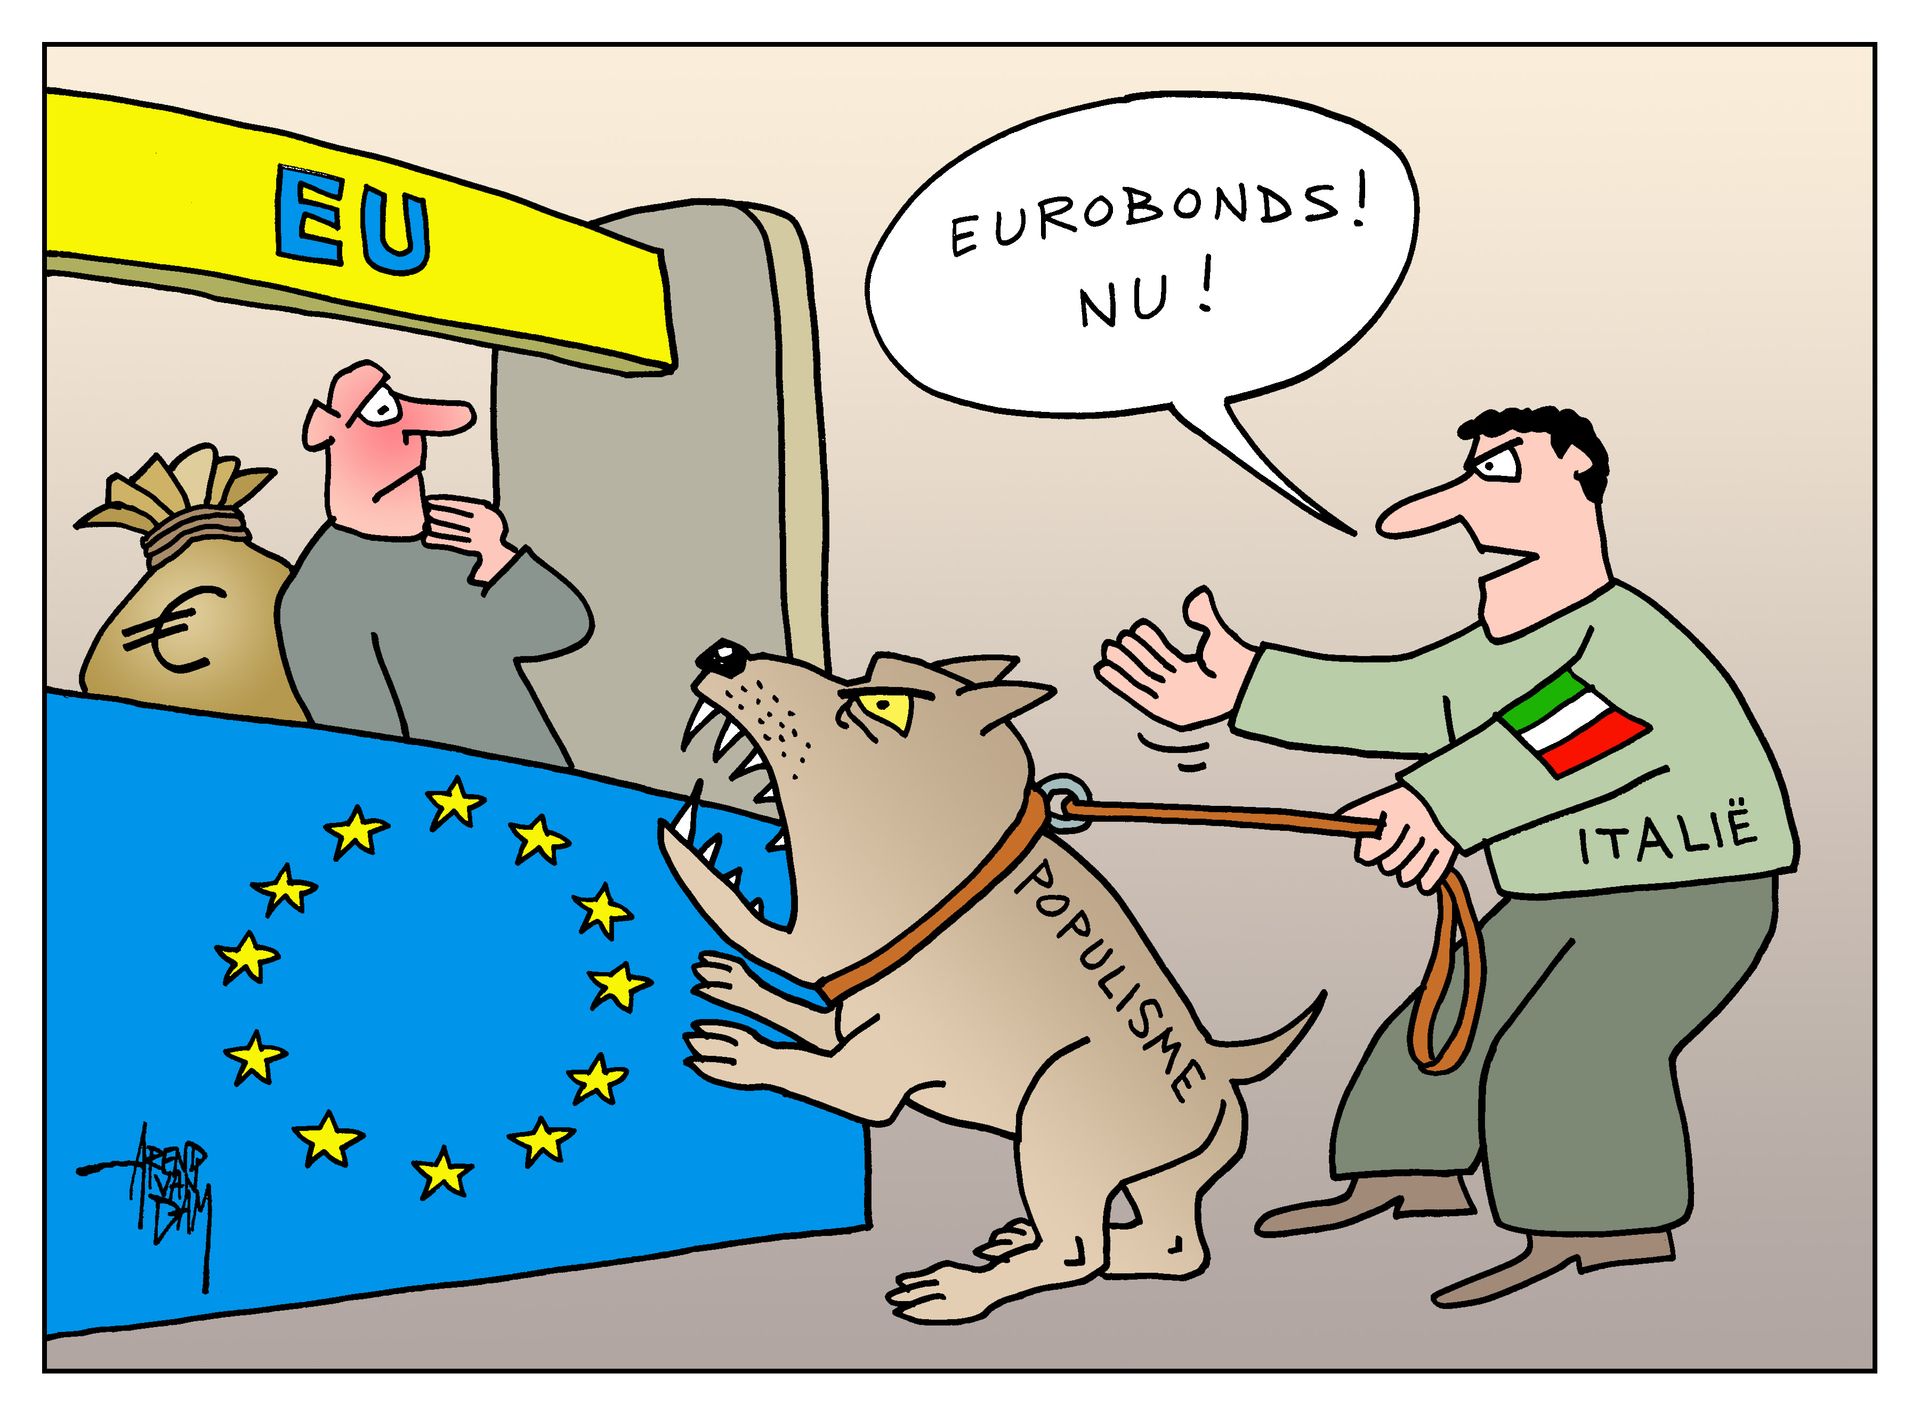 Italië&Eurobonds(PopulismeChantage)